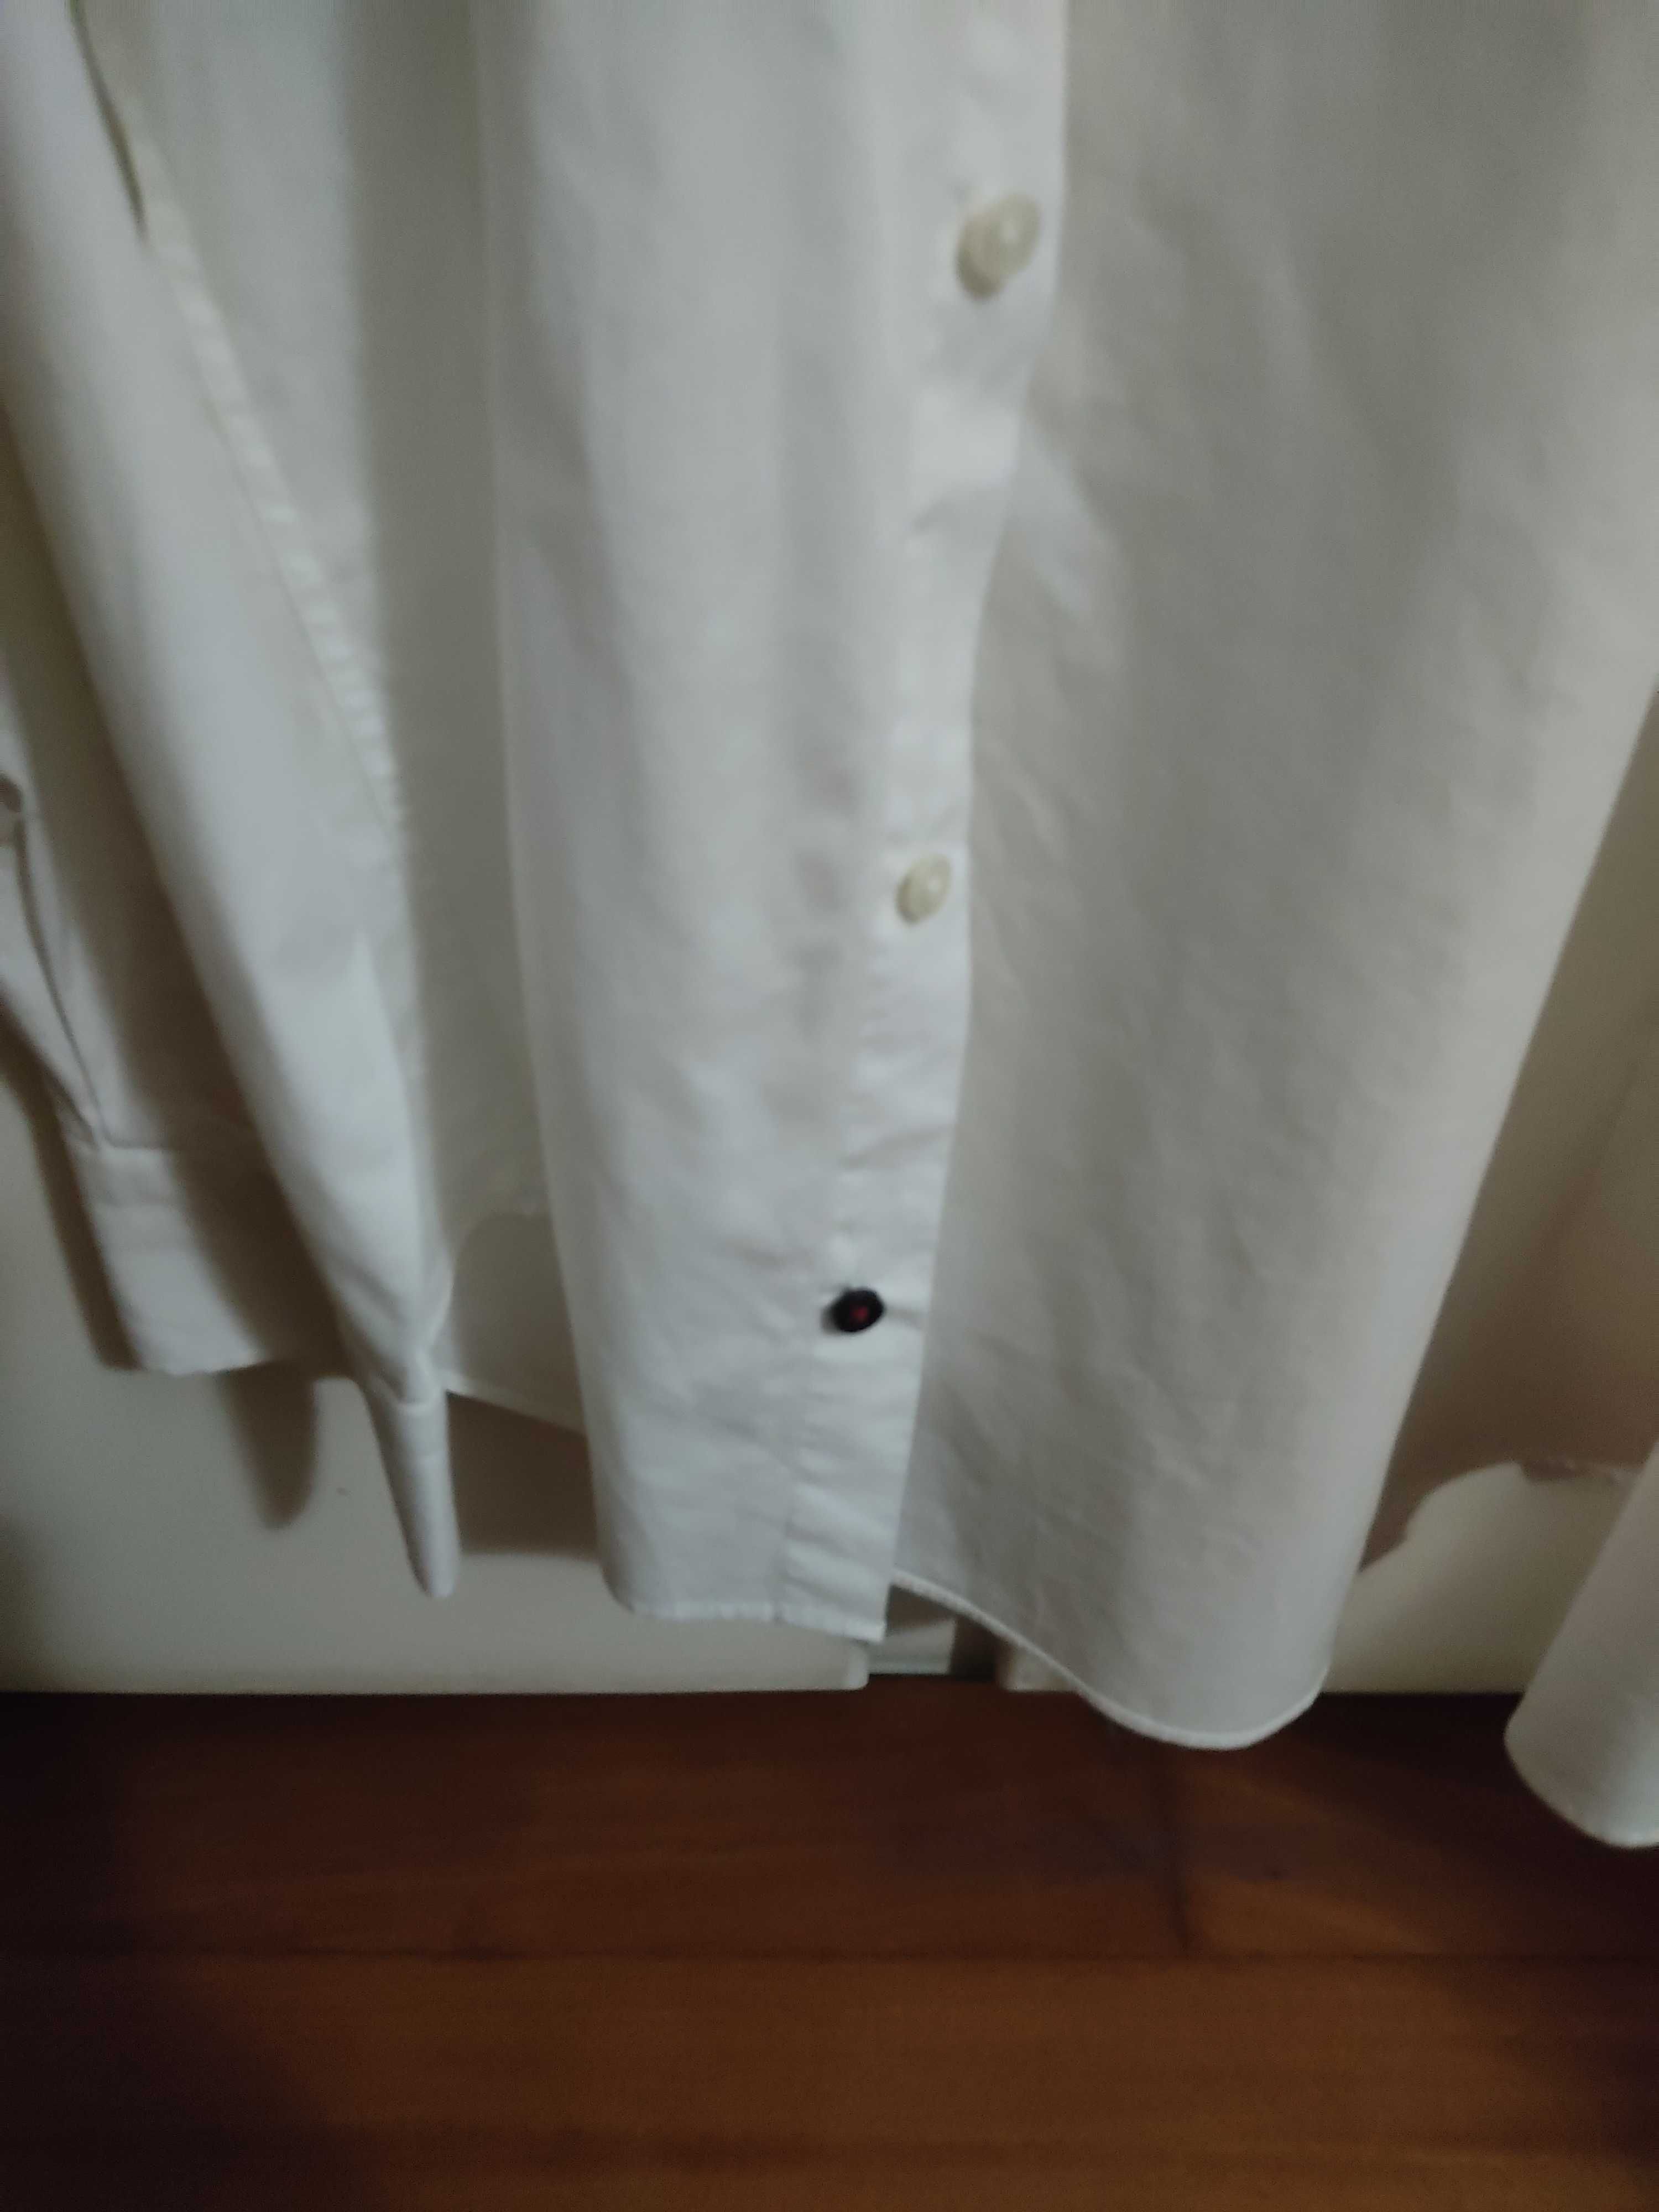 Camisa Tommy Hilfiguer | Tamanho 40 ou M - Branco